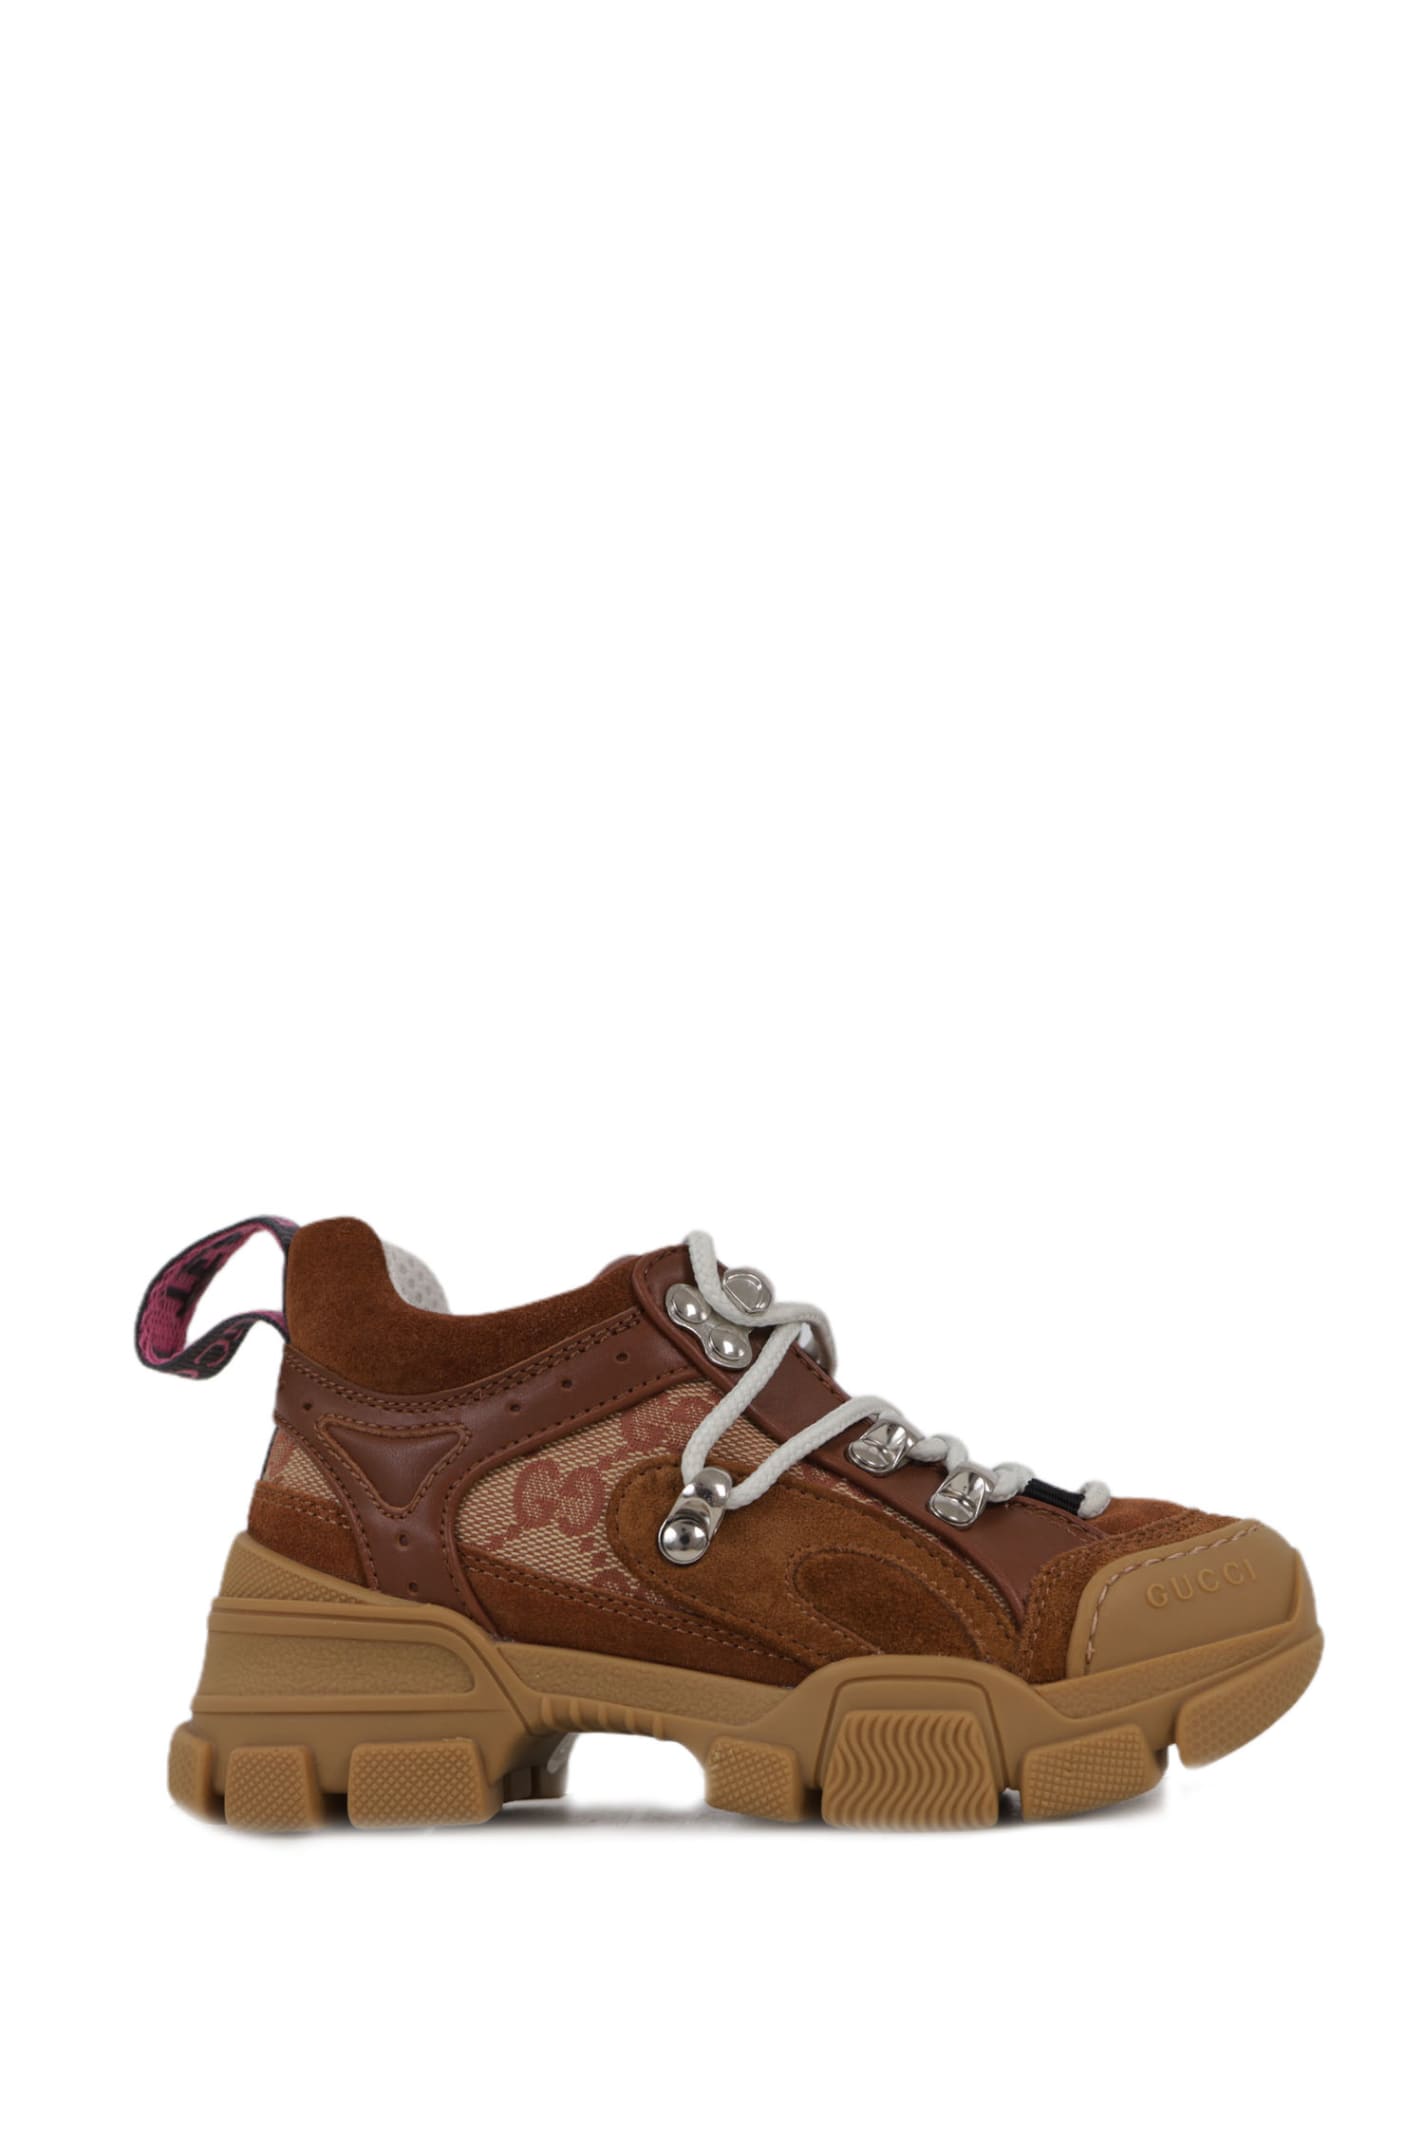 Gucci Kids' Flashtrek Sneakers In Brown